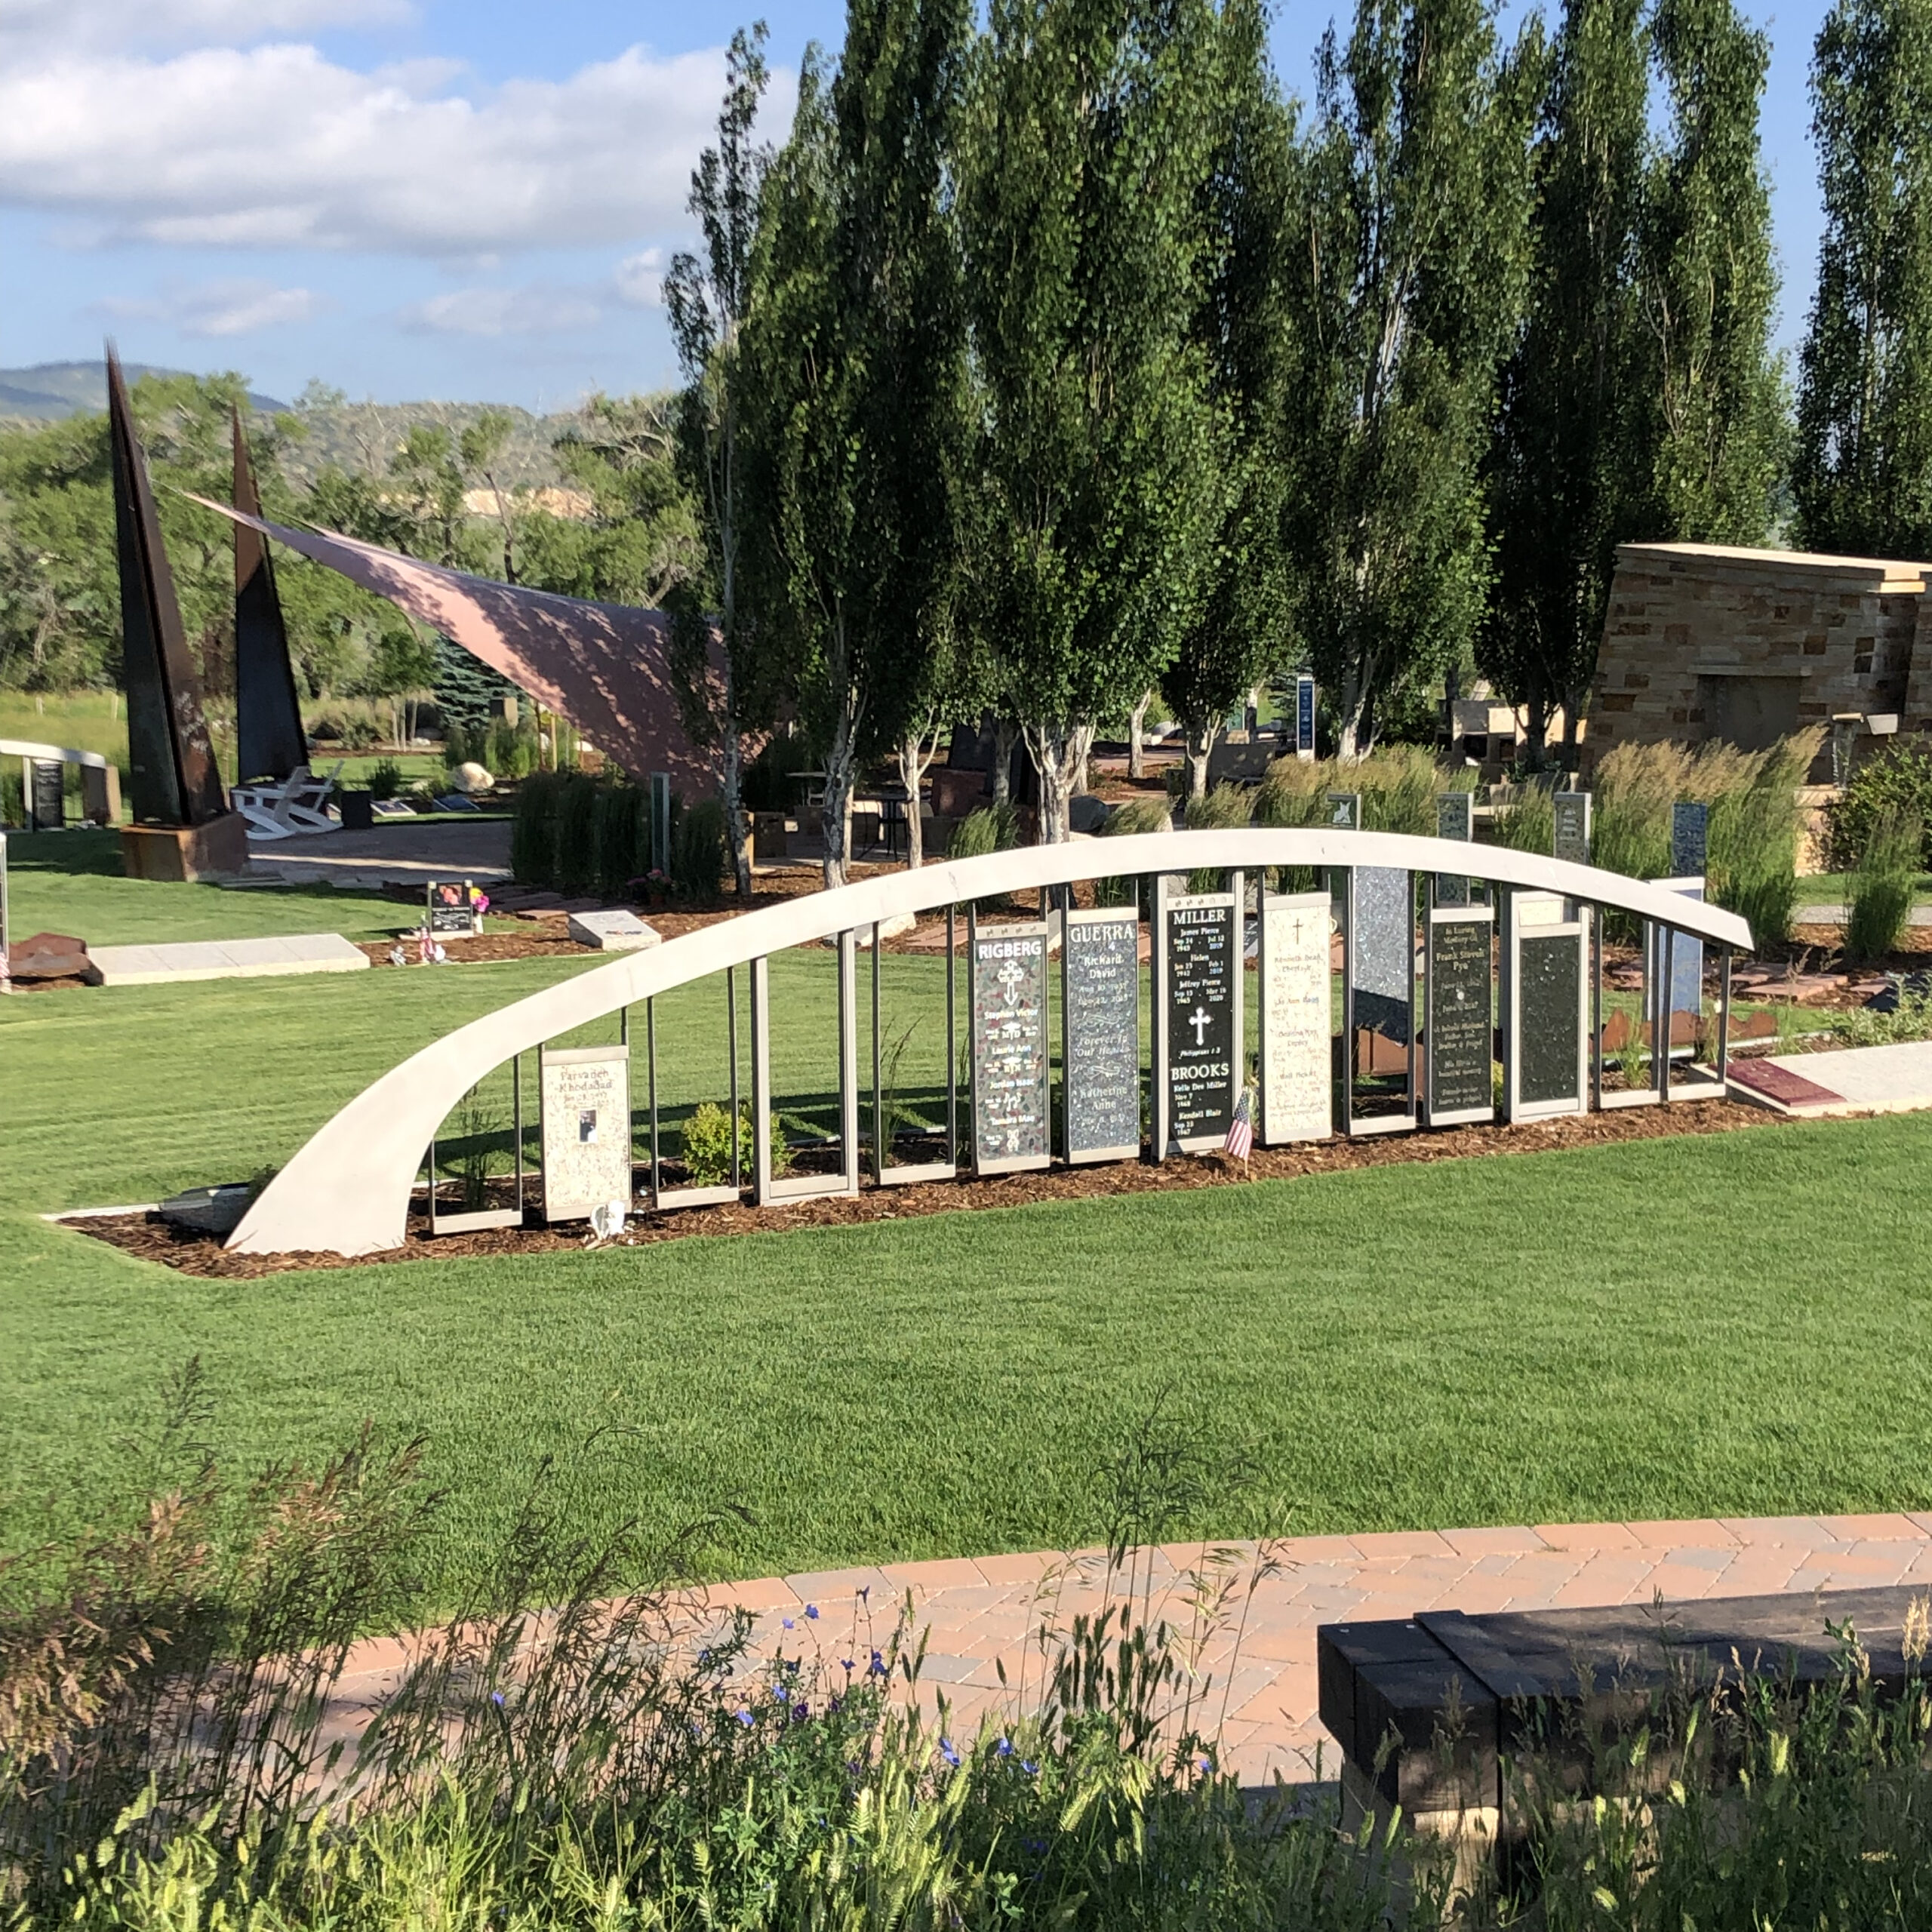 Archstone at Seven Stones Chatfield Botanic Gardens Cemetery in Colorado